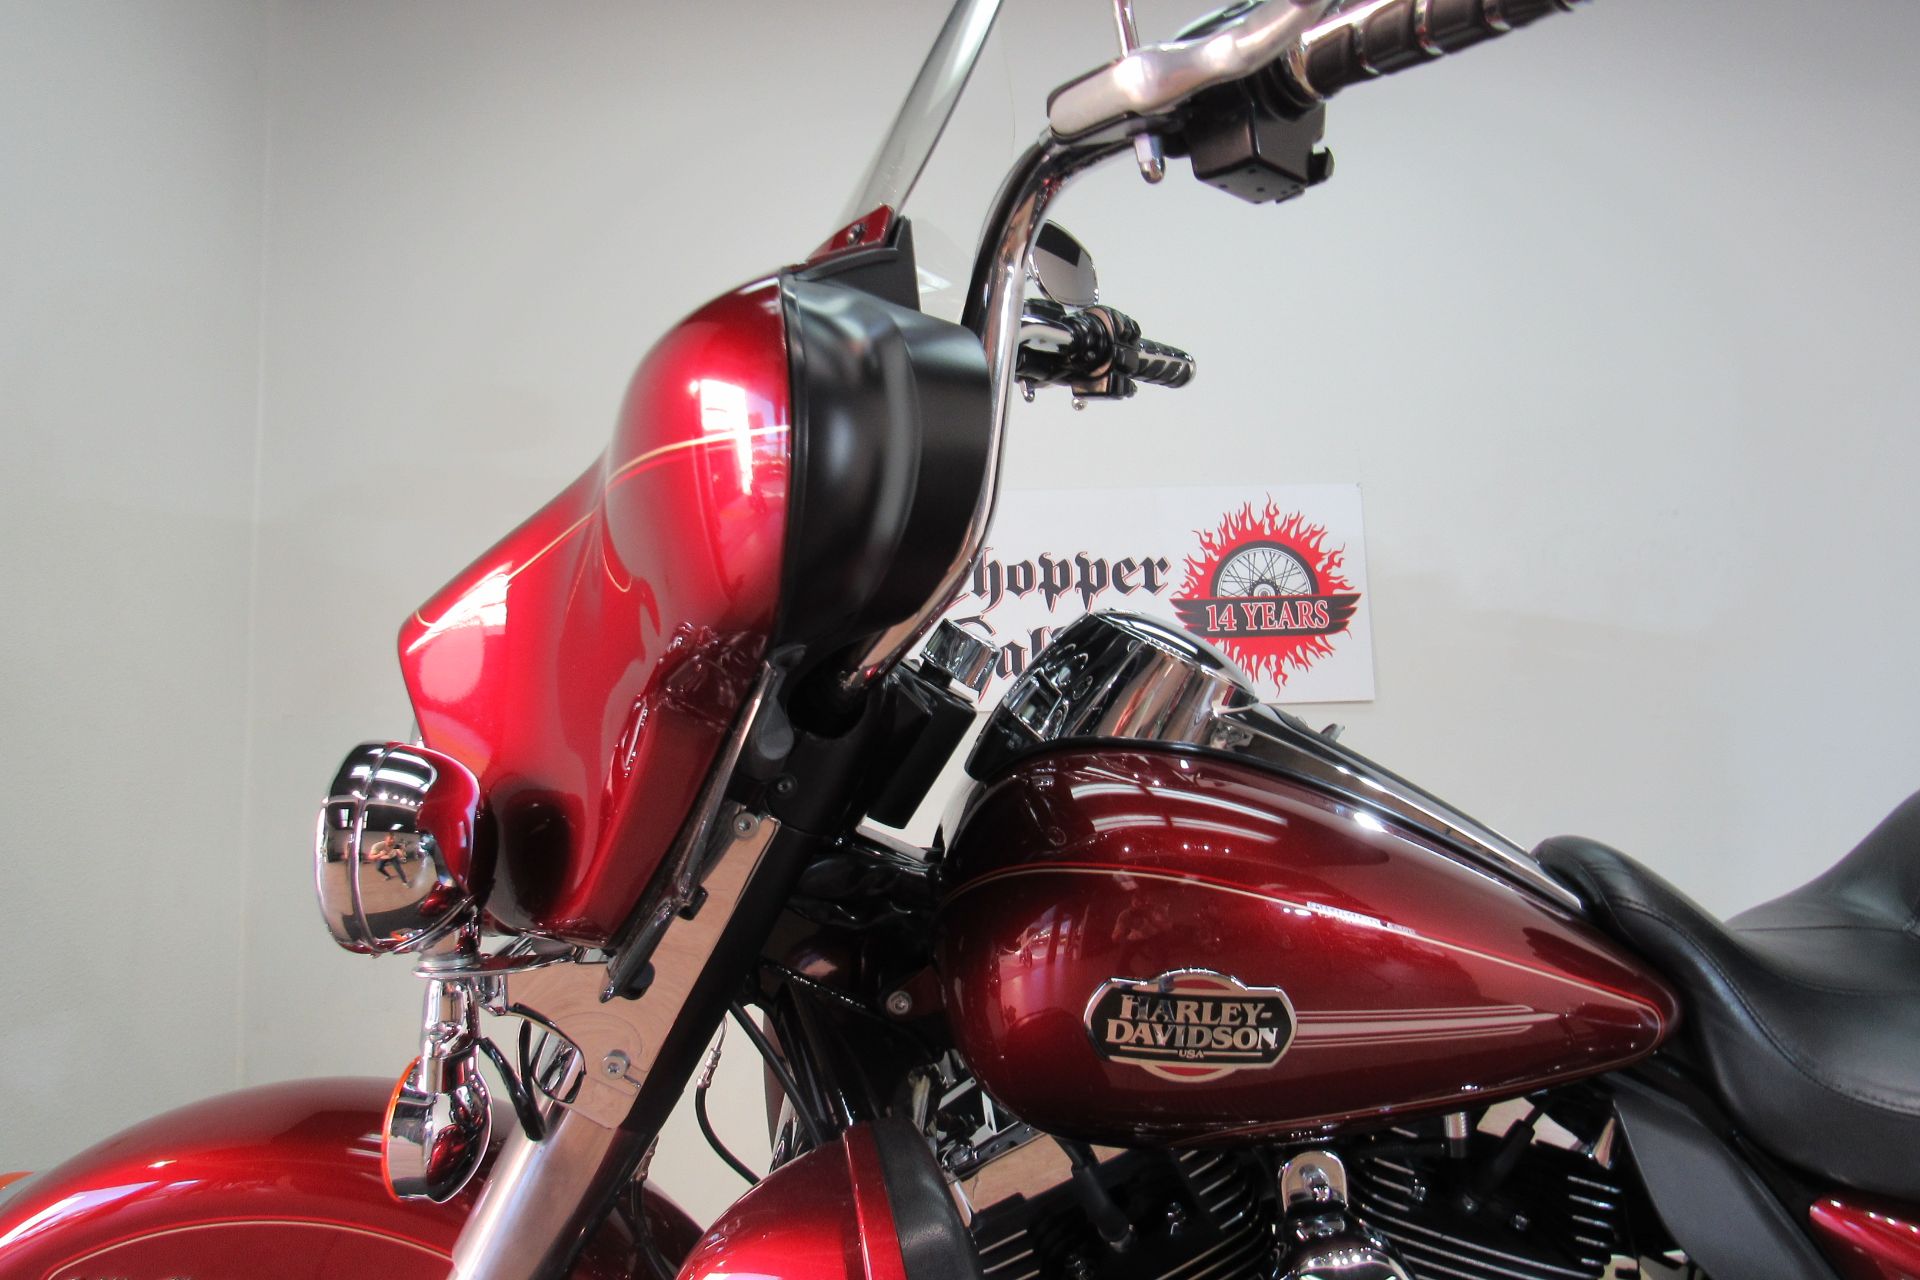 2010 Harley-Davidson Ultra Classic® Electra Glide® in Temecula, California - Photo 10